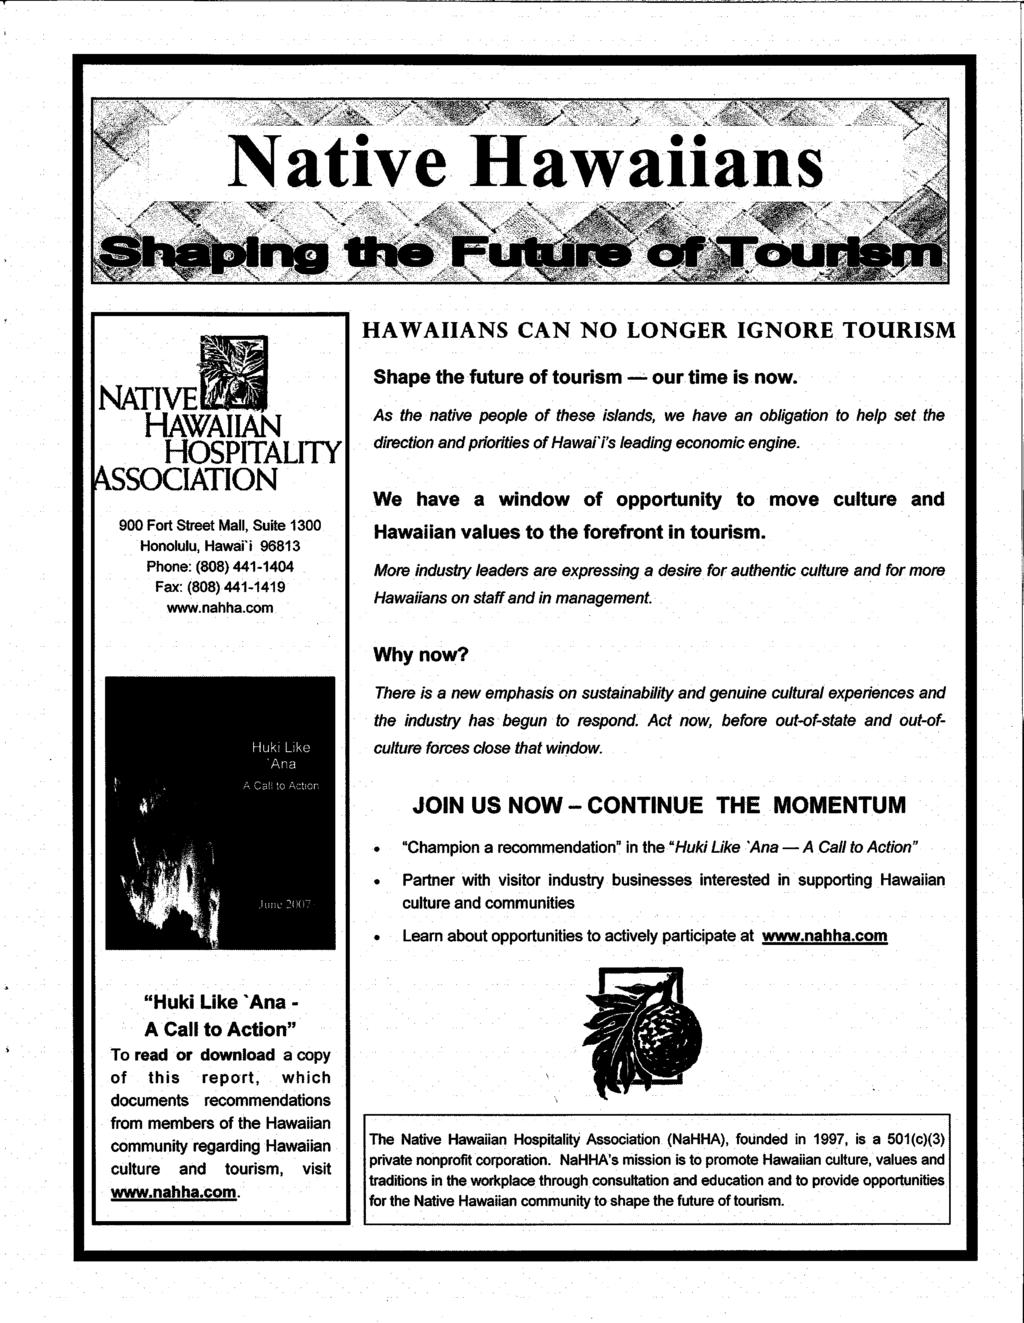 HAWAIIANS CAN NO LONGER IGNORE TOURISM NATIVE ' HAWAIIAN HOSPITALITY SSOCIATION 900 Fort Street Mall, Suite 1300 Honolulu, Hawai'i 96813 Phone: (808)441-1404 Fax: (808)441-1419 www.nahha.